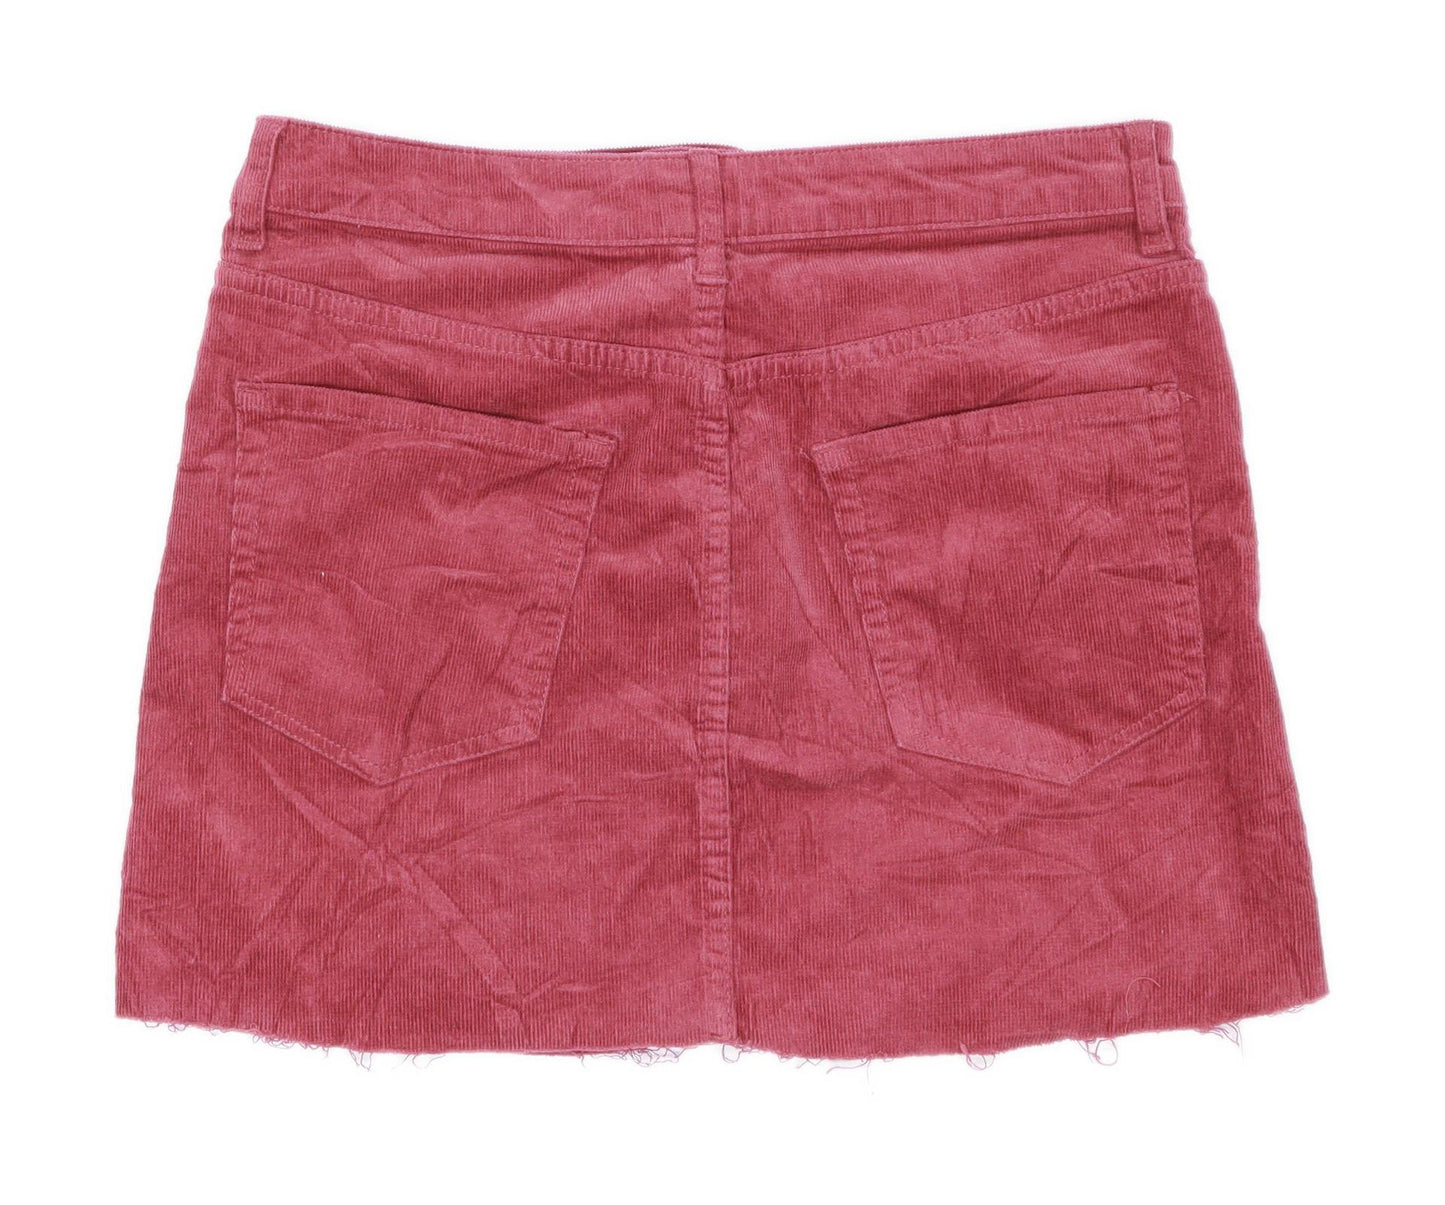 Forever 21 Womens Size W28 Corduroy Brown Skirt (Regular)